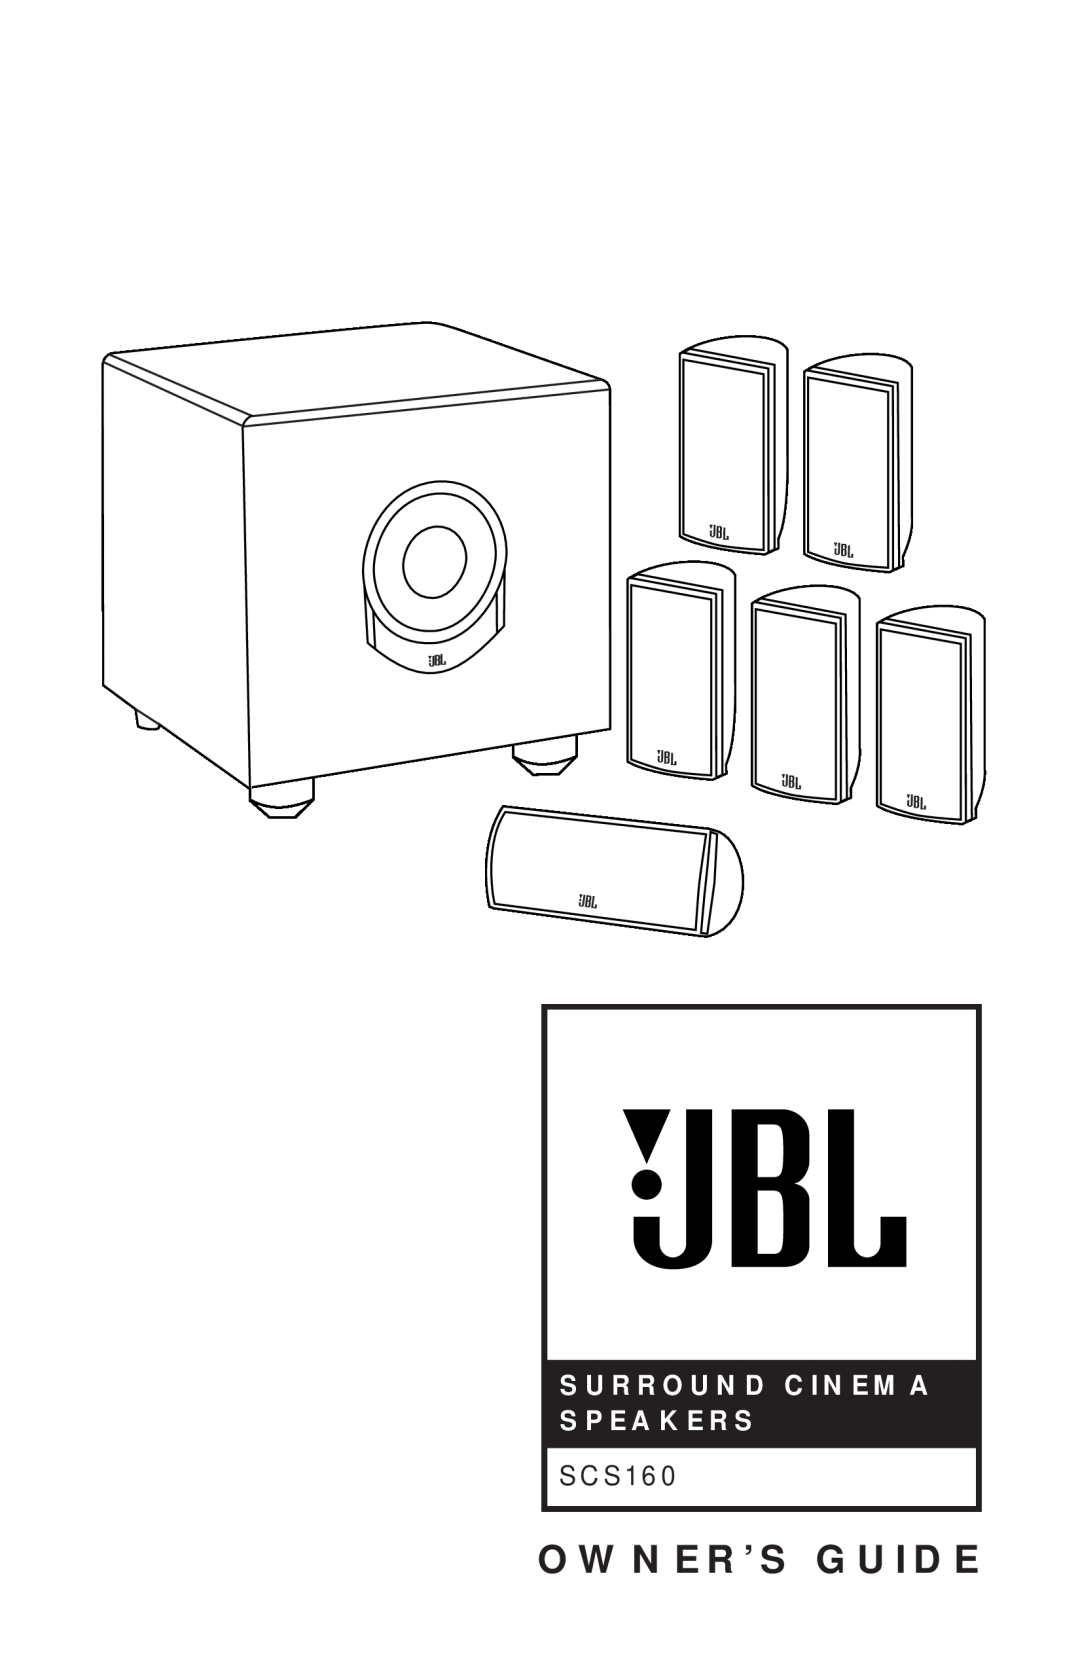 JBL SCS160 manual Owner’S Guide, Surround Cinema Speakers 